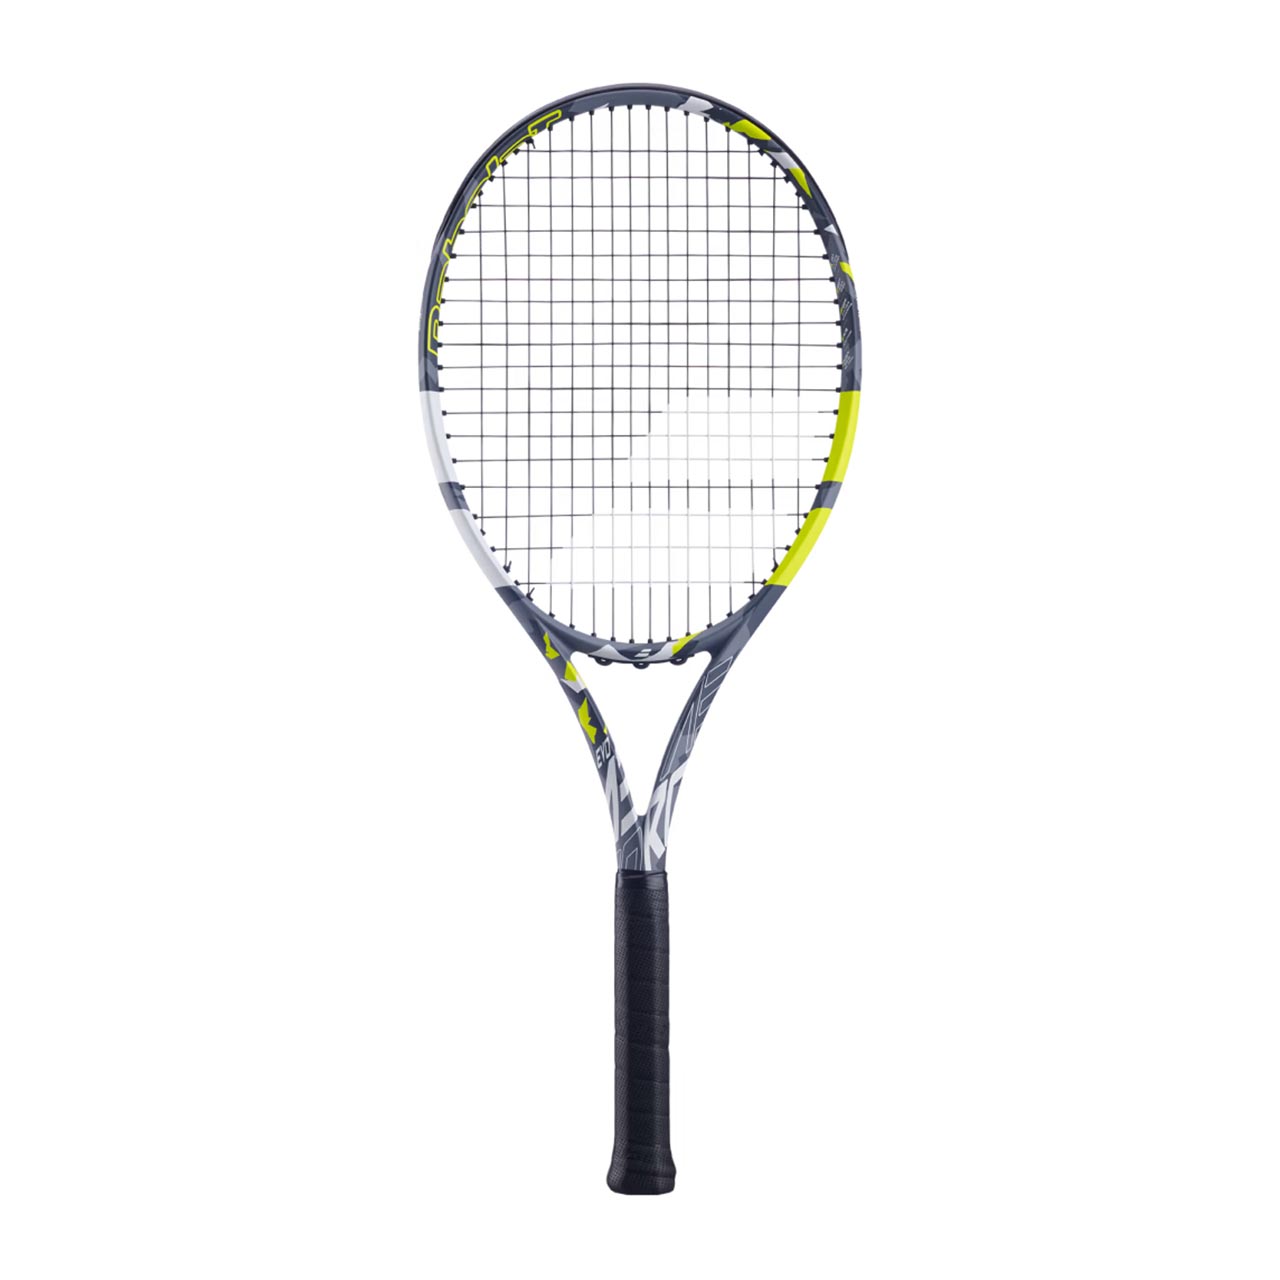 sport service italia tennis racket babolat evo aero 102505 100 - Babolat - Sport Service Italia